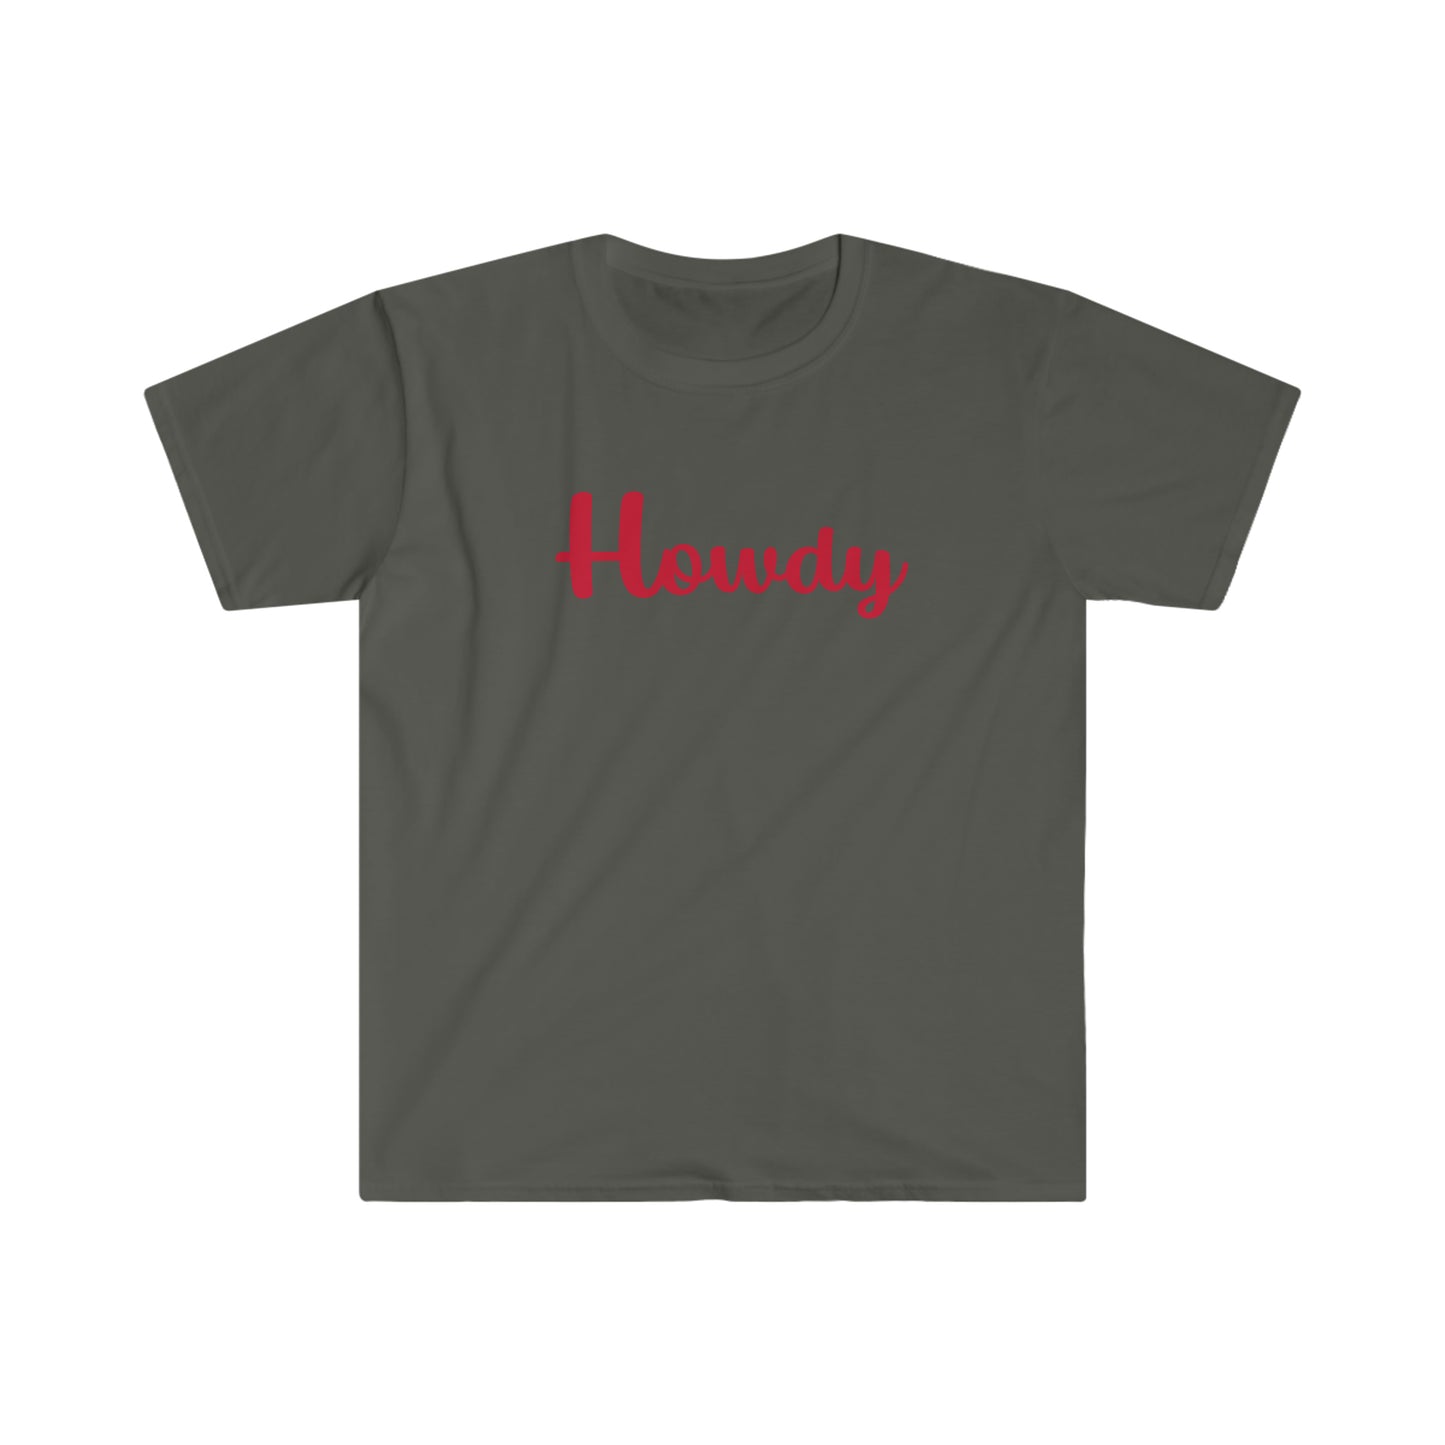 Howdy - Houston T-Shirt